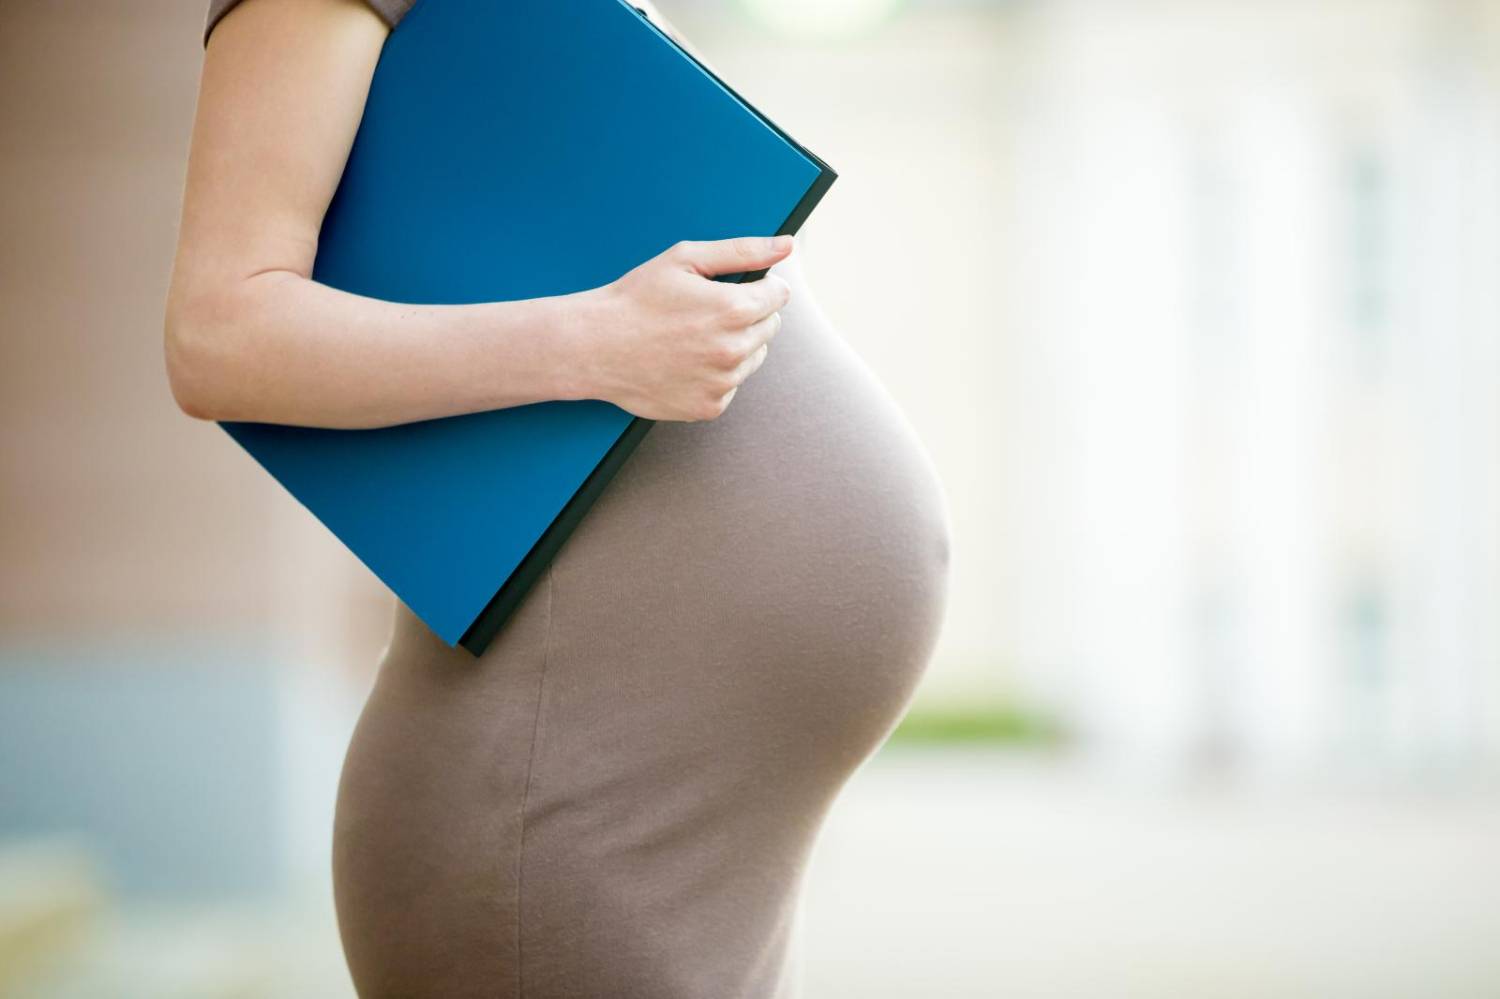 Empresa que duvidou de gravidez de empregada é condenada pela justiça